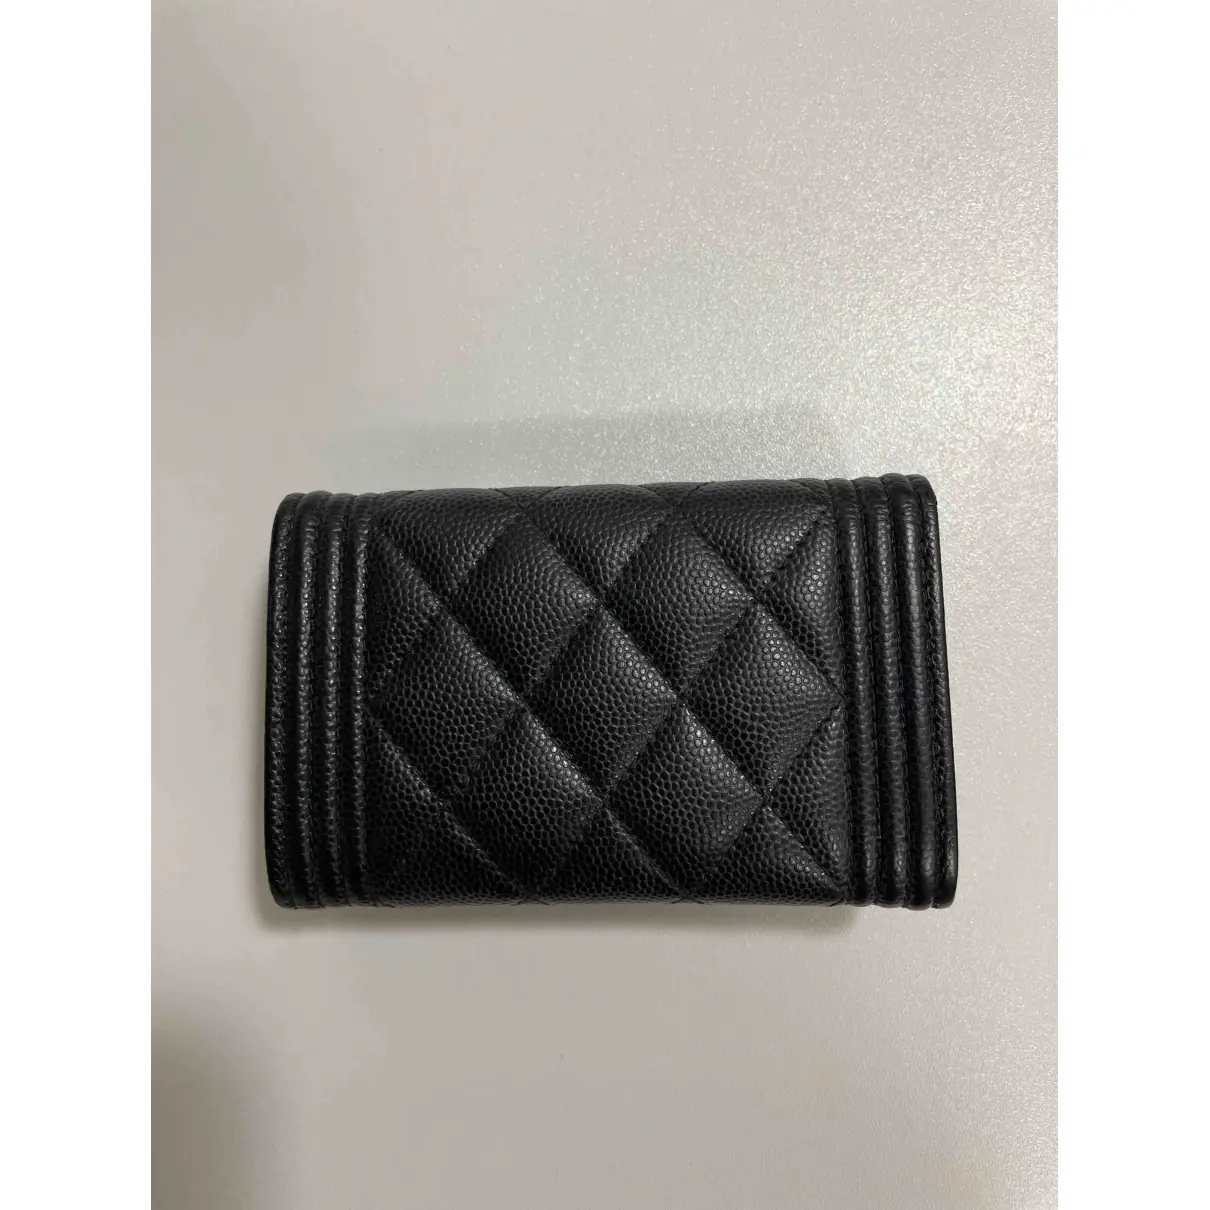 Buy Chanel Boy leather purse online